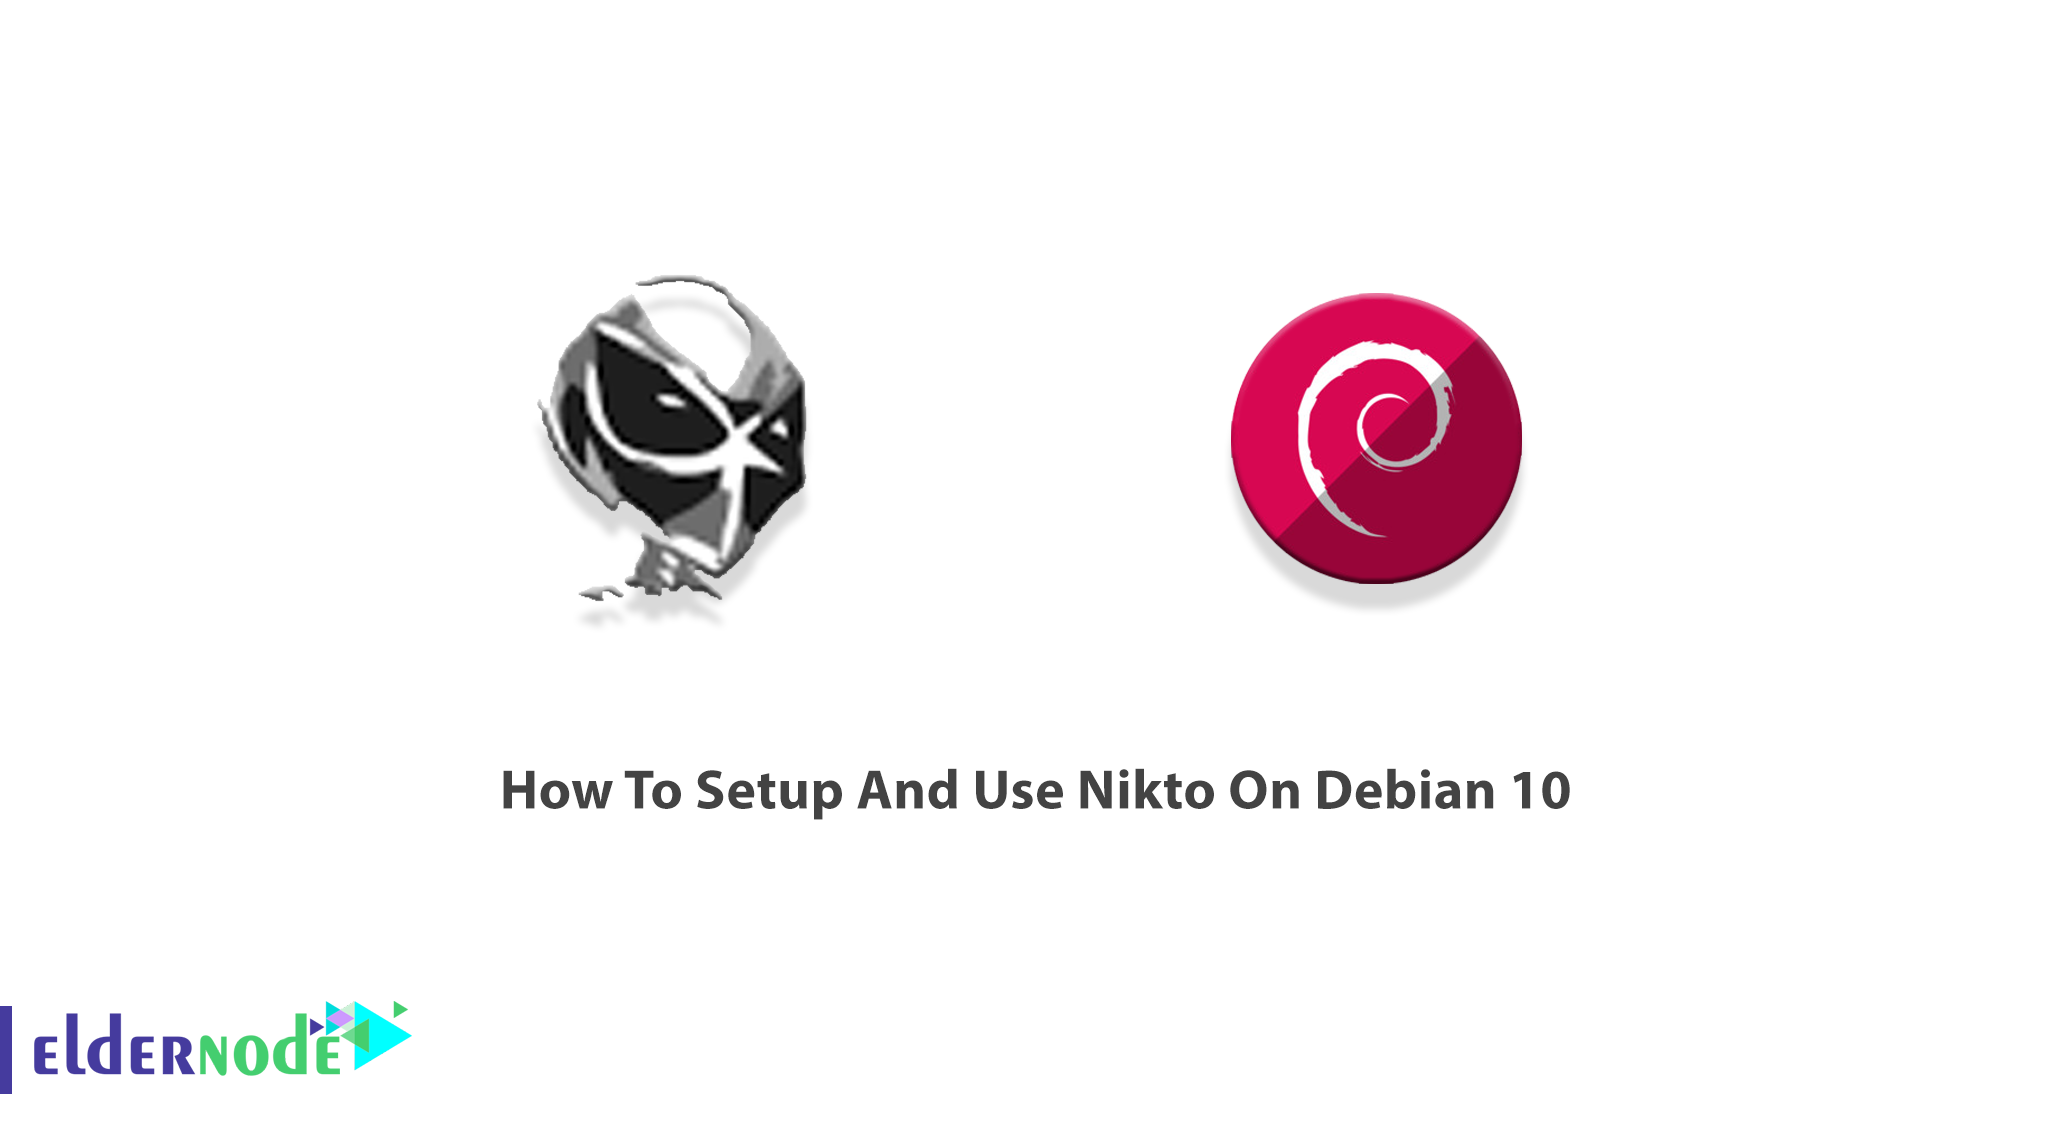 How To Setup And Use Nikto On Debian 10